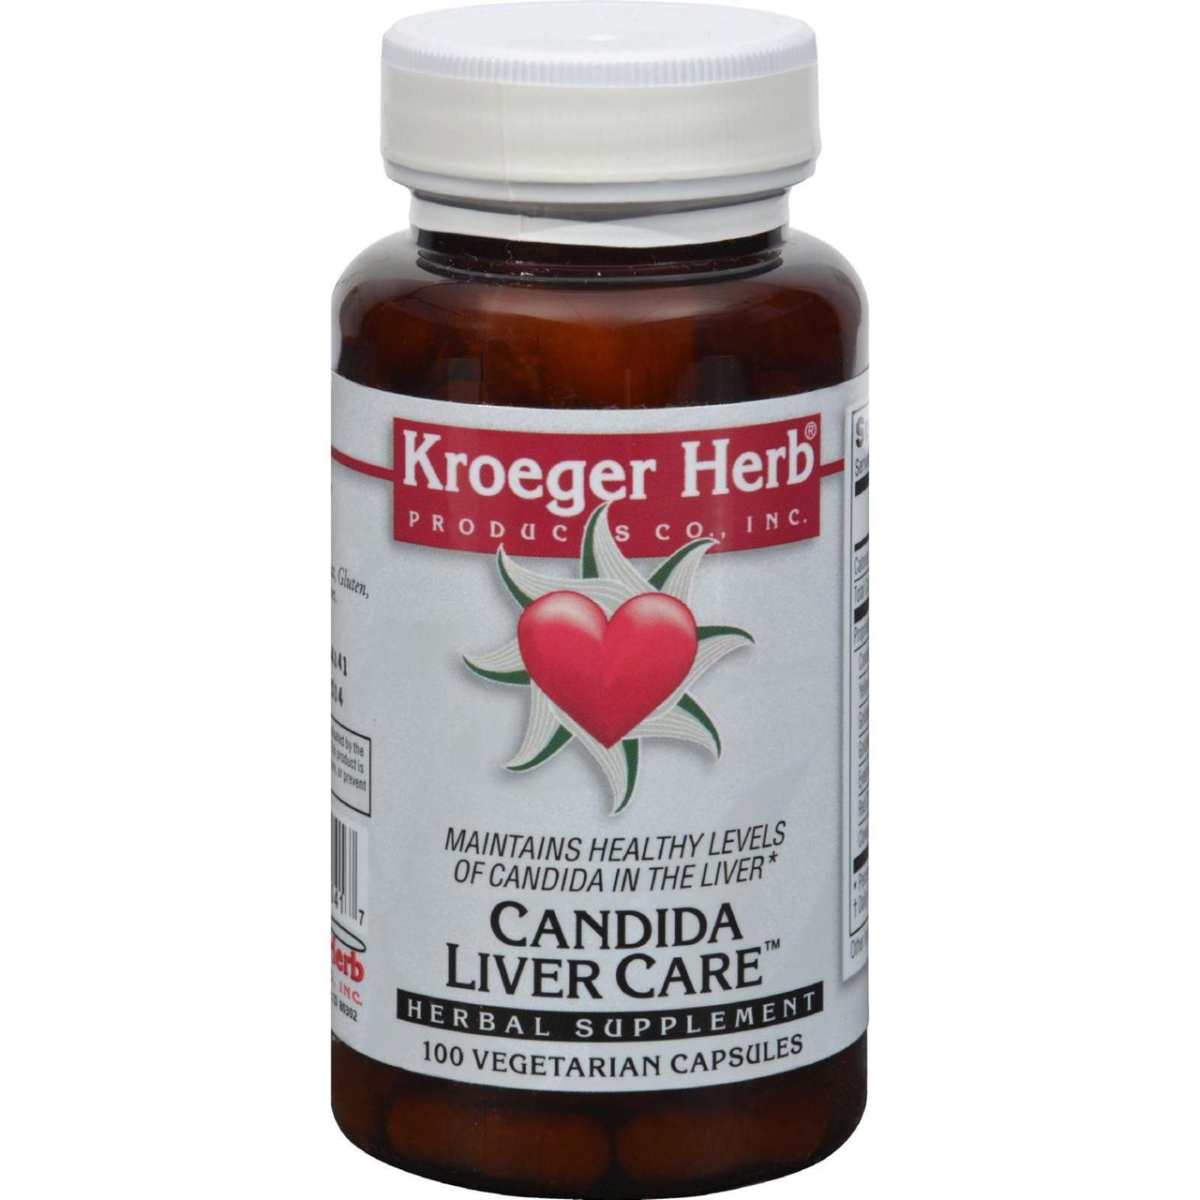 Hg0339903 Candida Liver Care - 100 Vegetarian Capsules